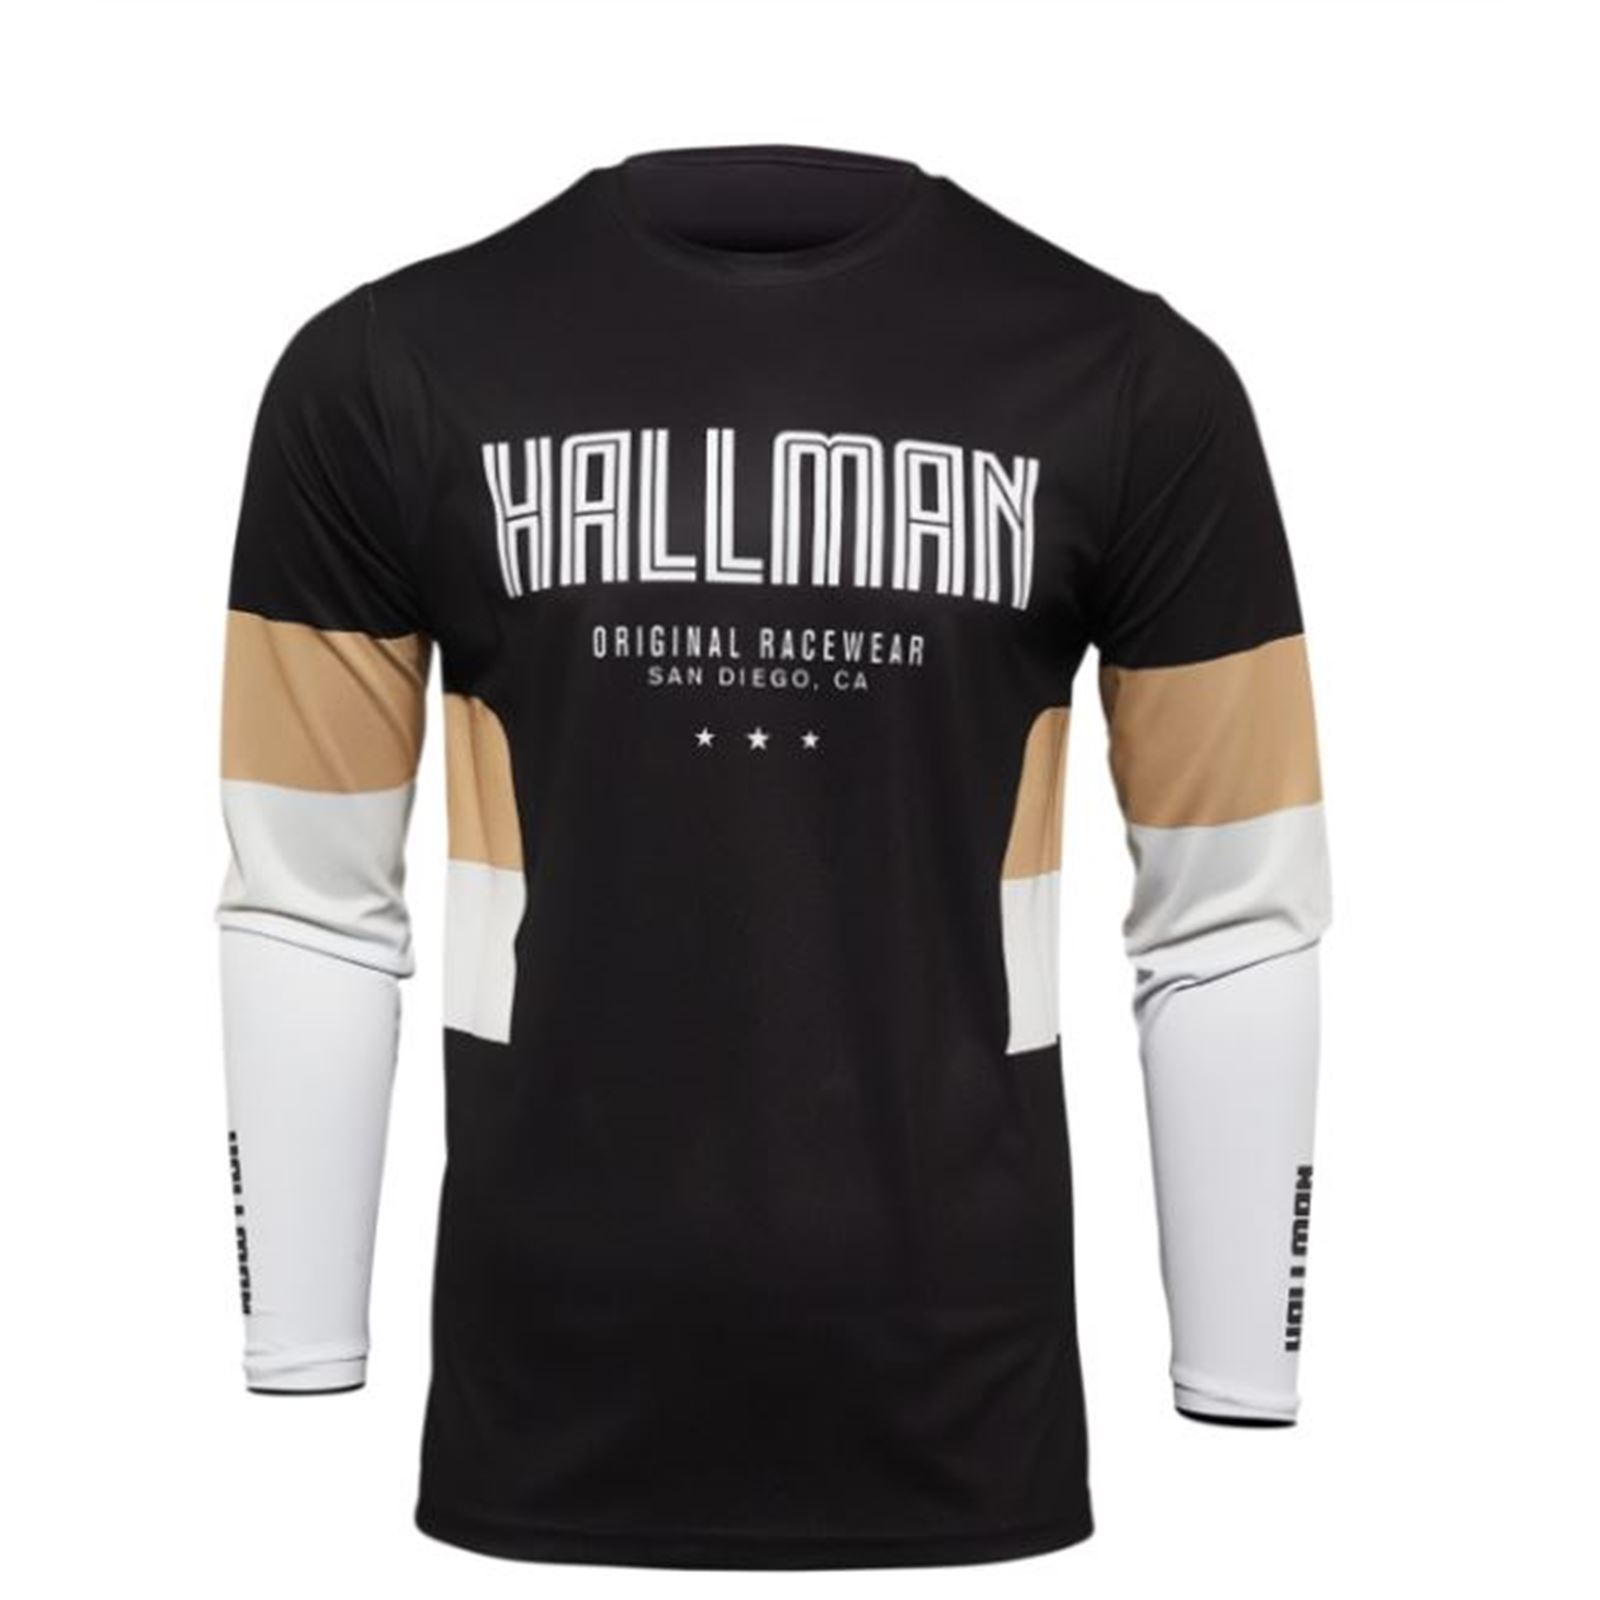 Thor Hallman Different Drift Jersey - Black/Light Tan - XL